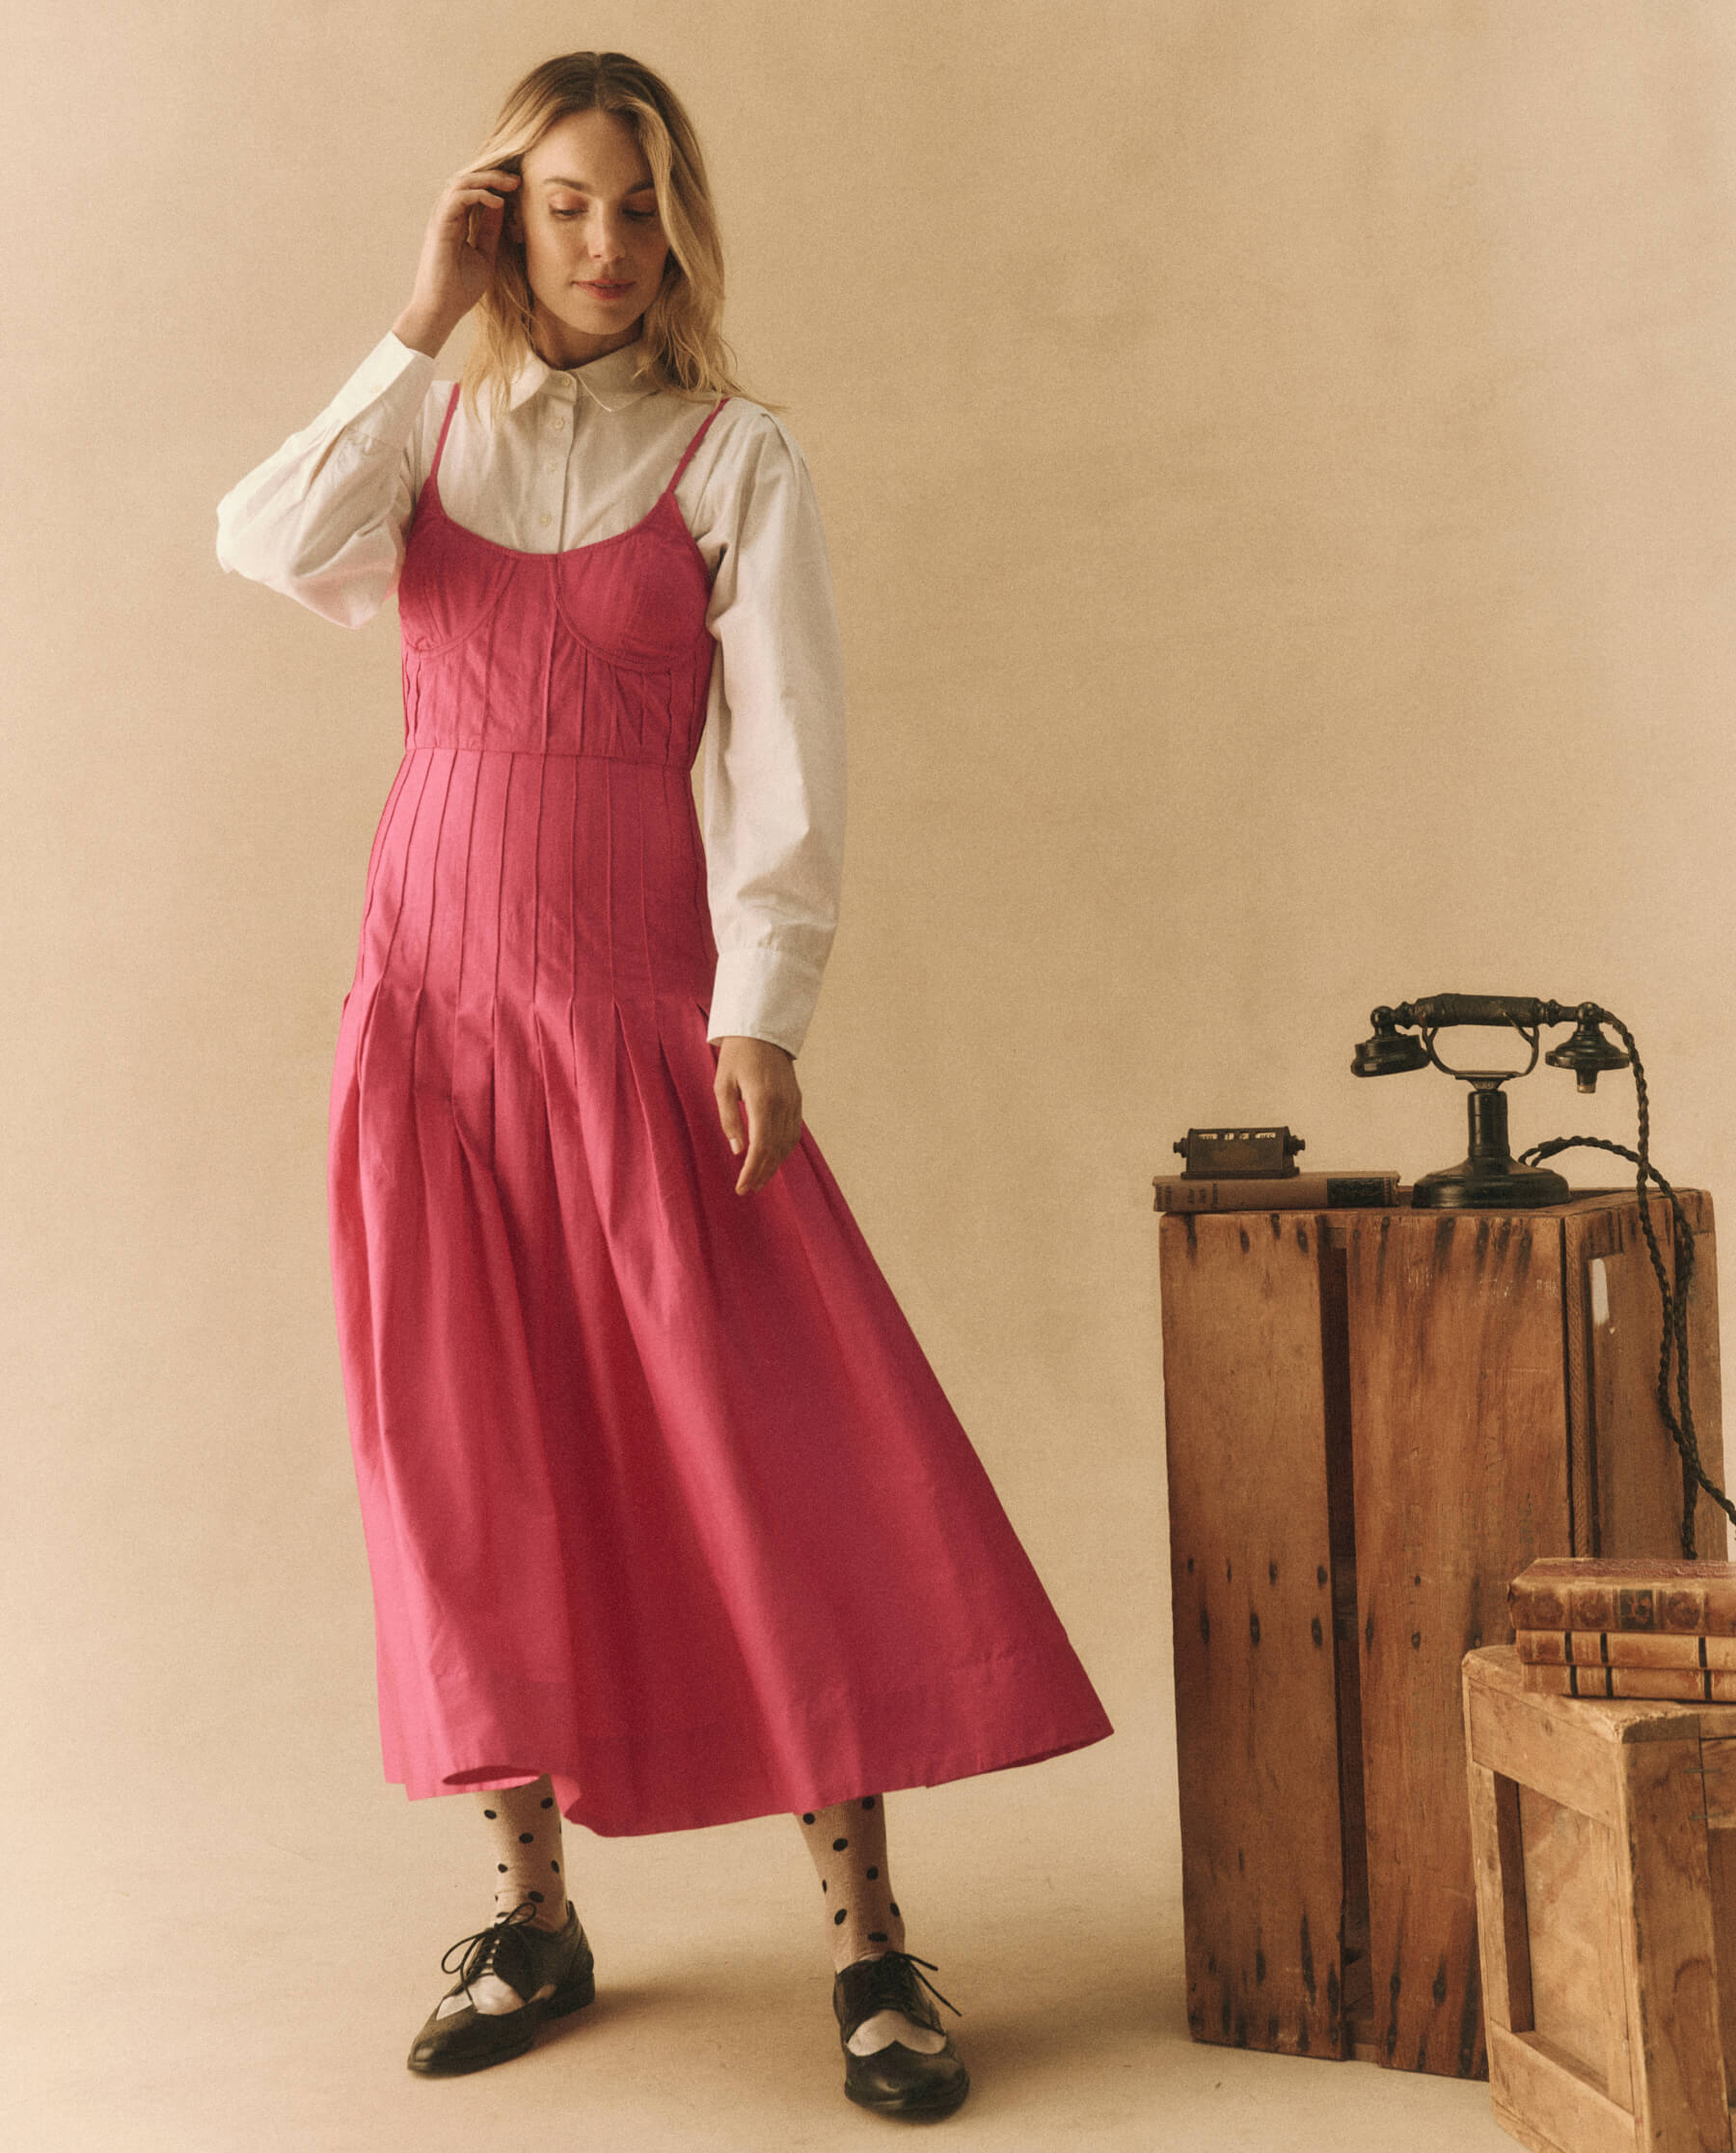 The Petticoat Dress. -- Fuchsia DRESSES THE GREAT. HOL 23 D1 SALE